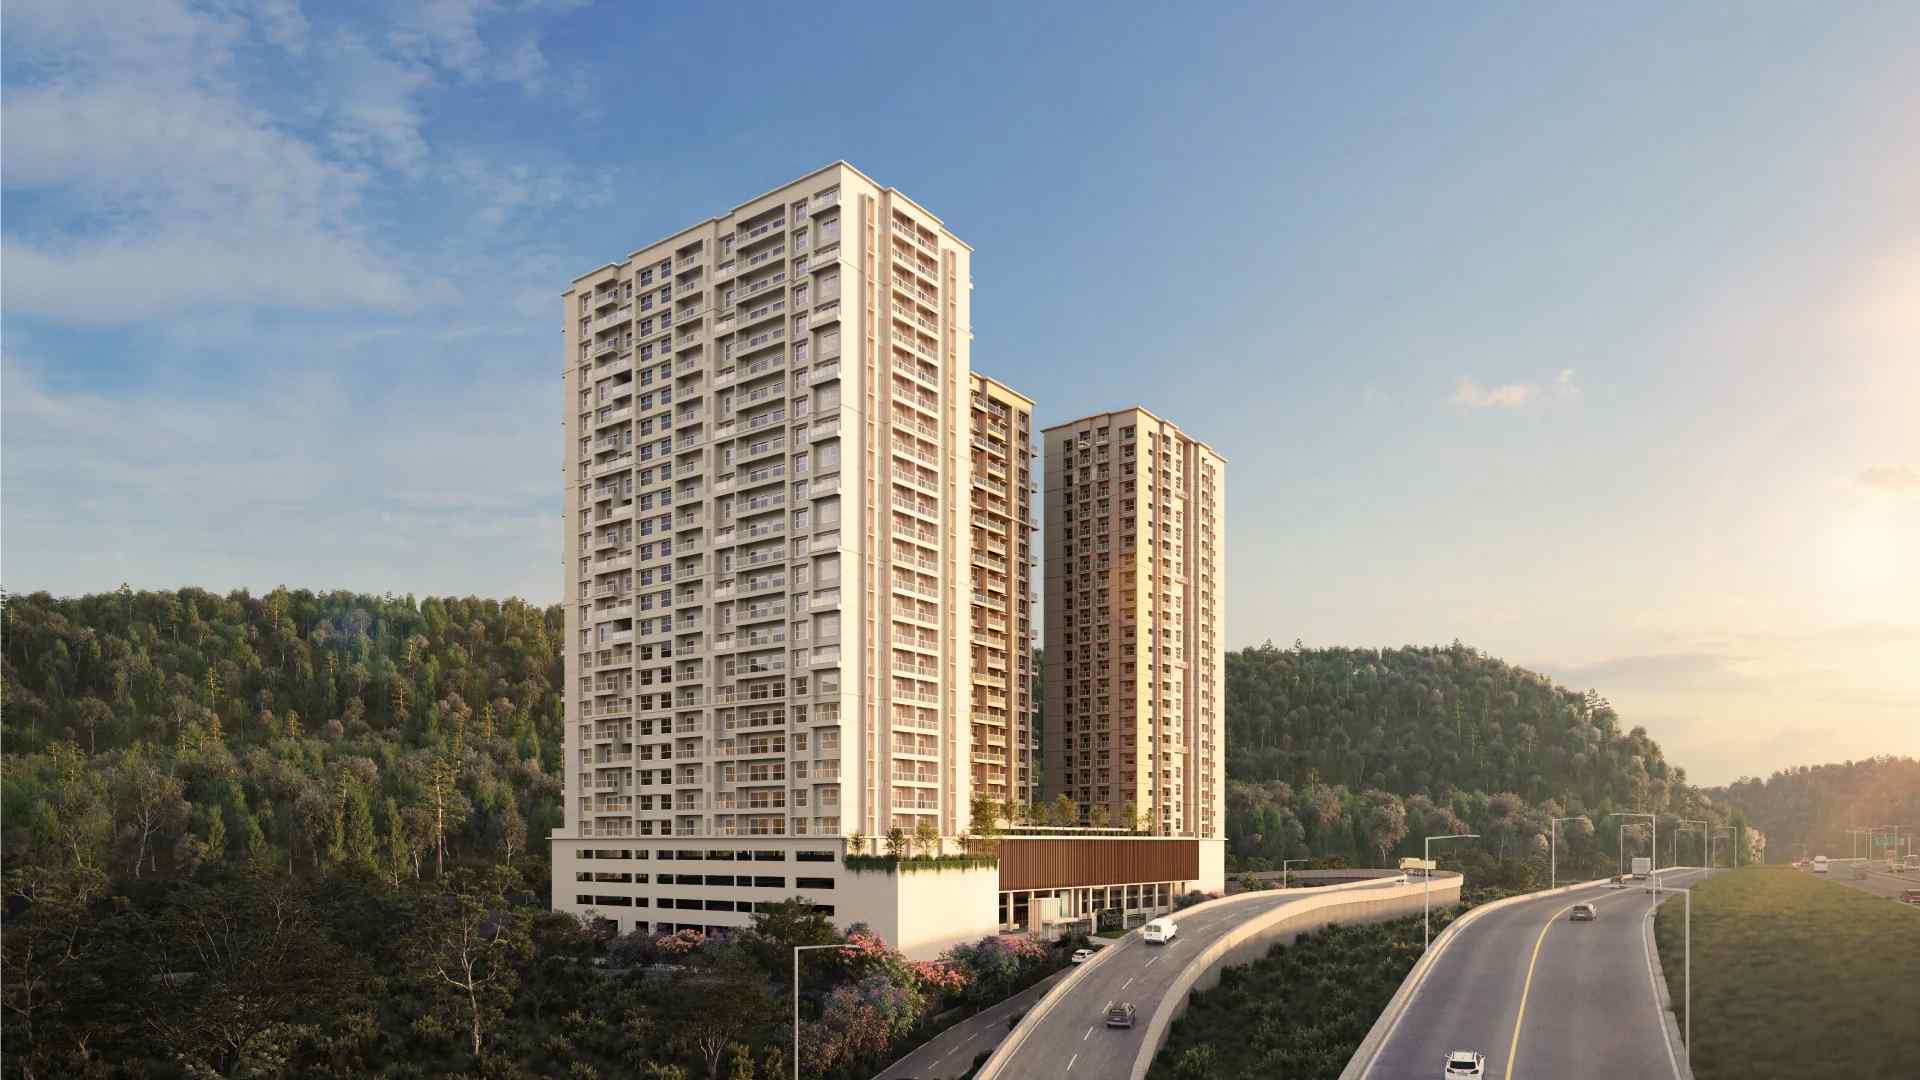 Sobha Nesara - An upcoming residential apartments in Kothrud, Pune by Sobha Group